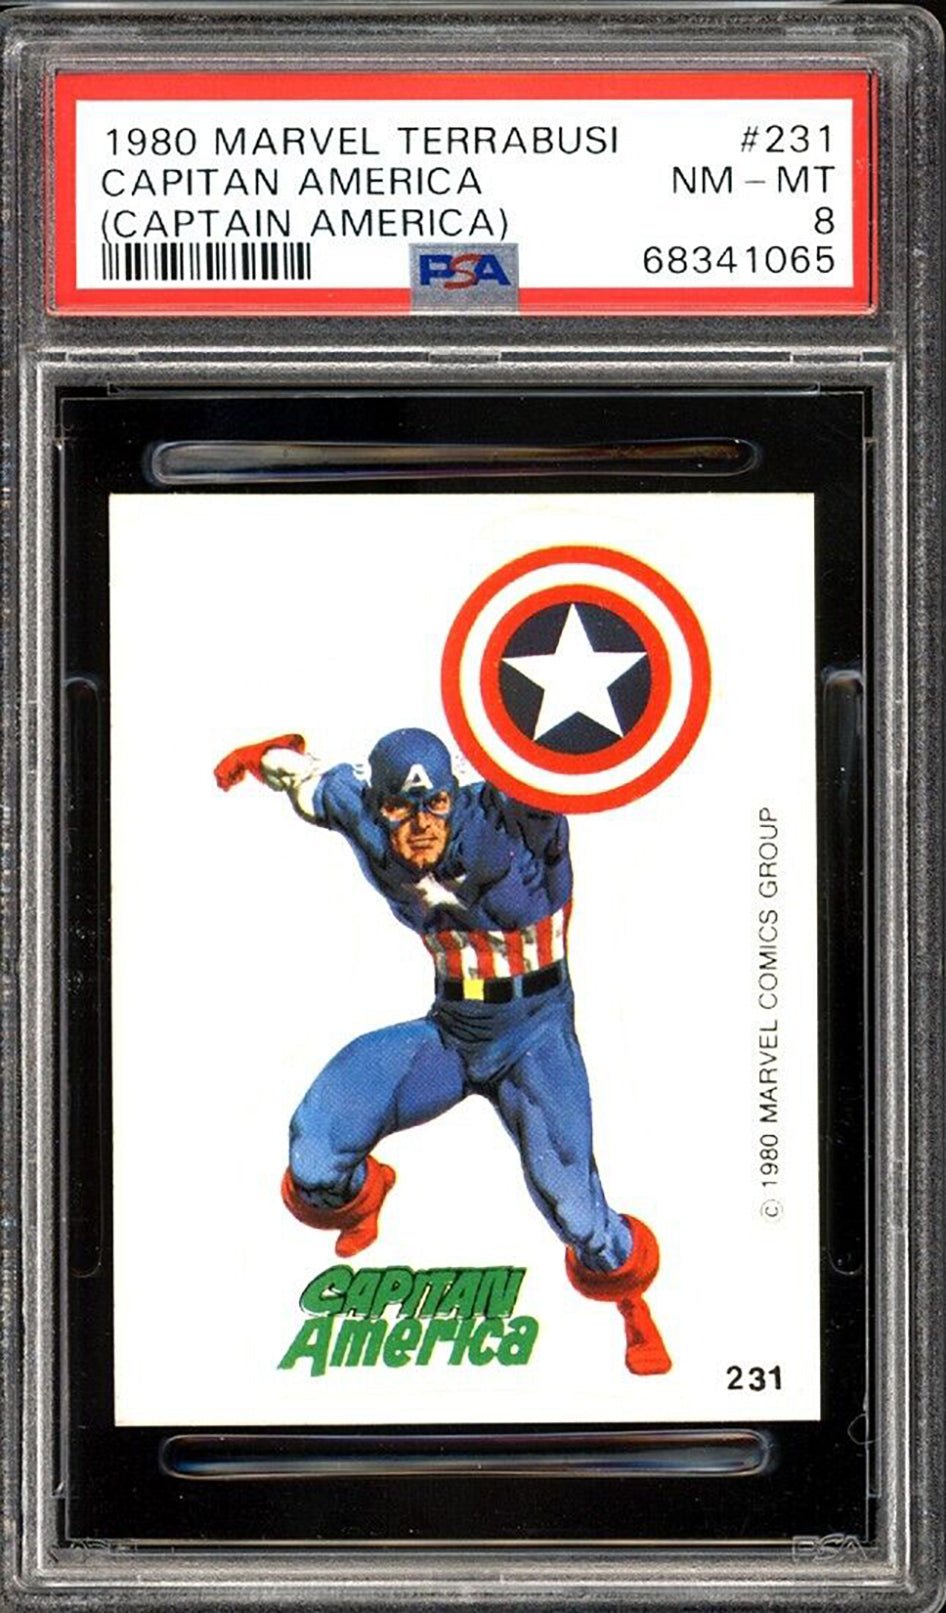 CAPTAIN AMERICA PSA 8 1980 Marvel Terrabusi Sticker #231 Capitan America C1 Marvel Graded Cards Sticker - Hobby Gems